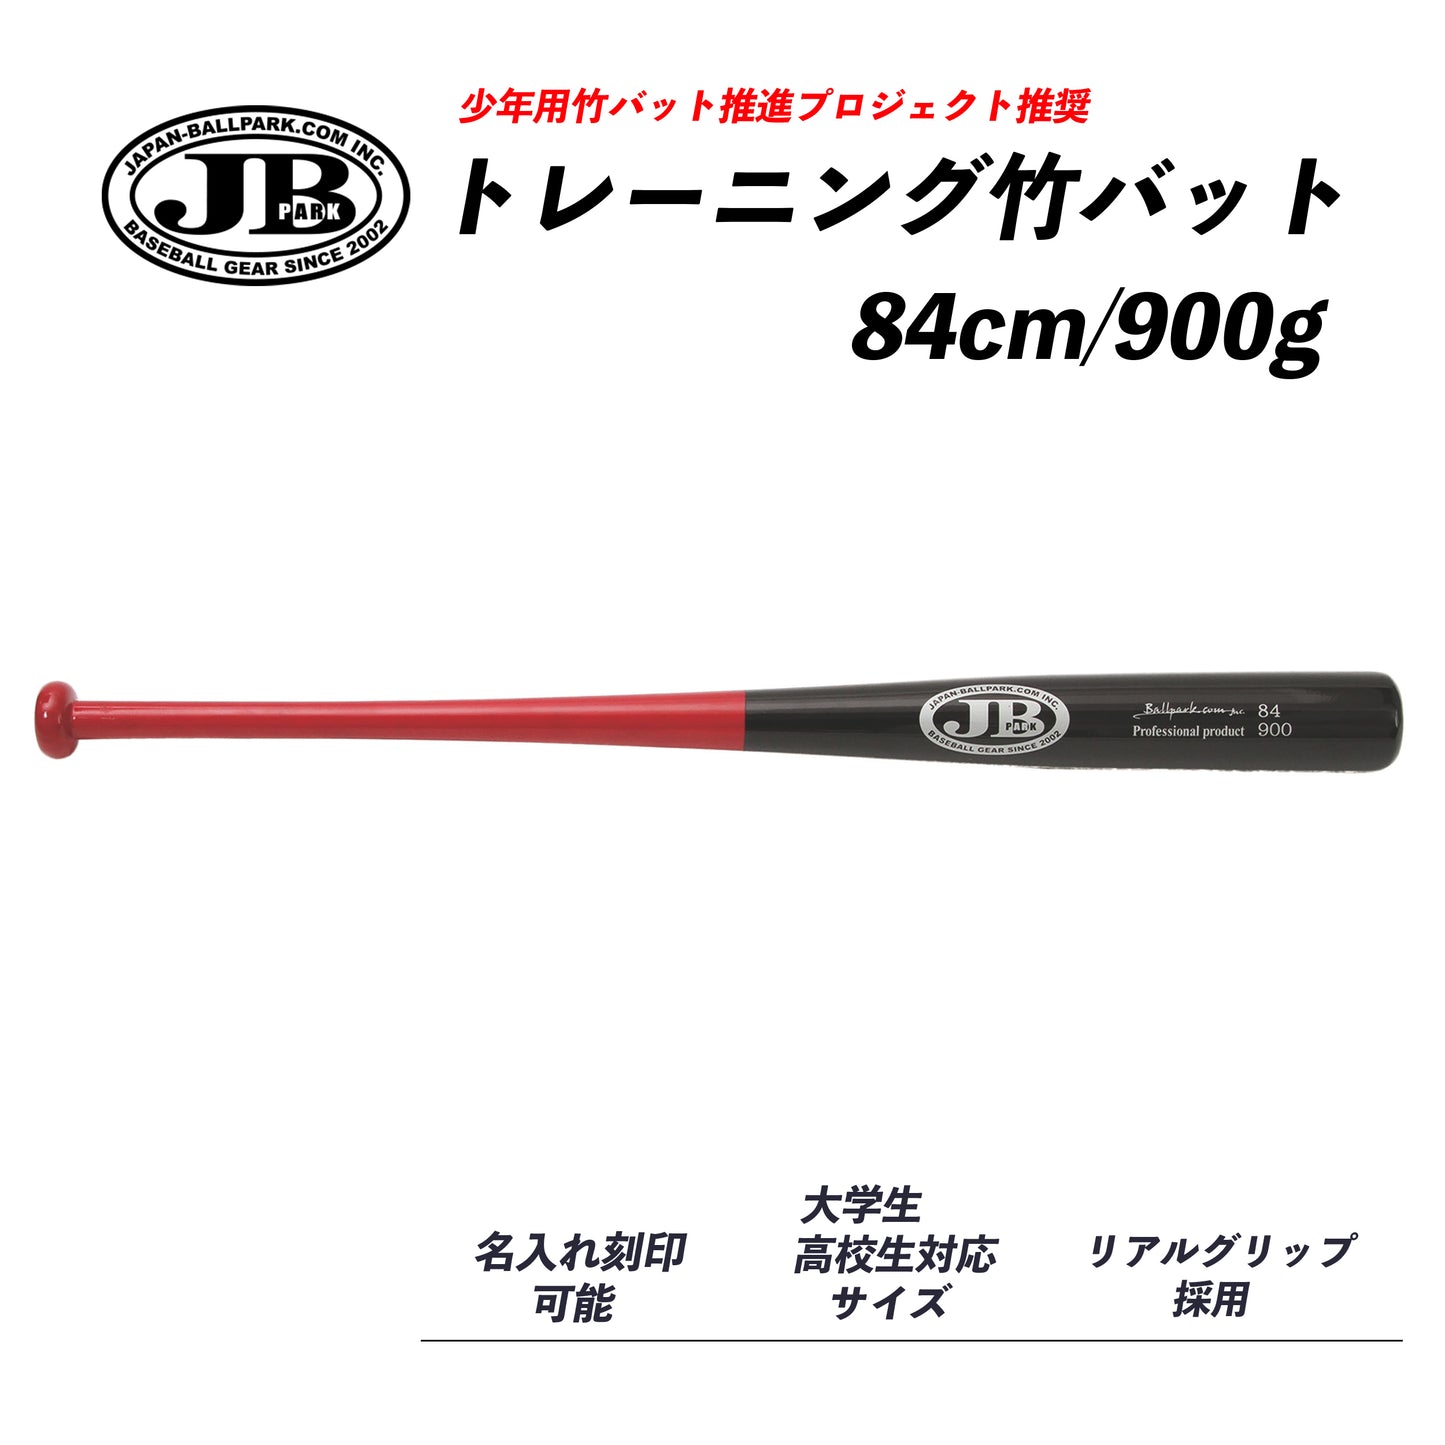 Training bamboo bat [Real grip]